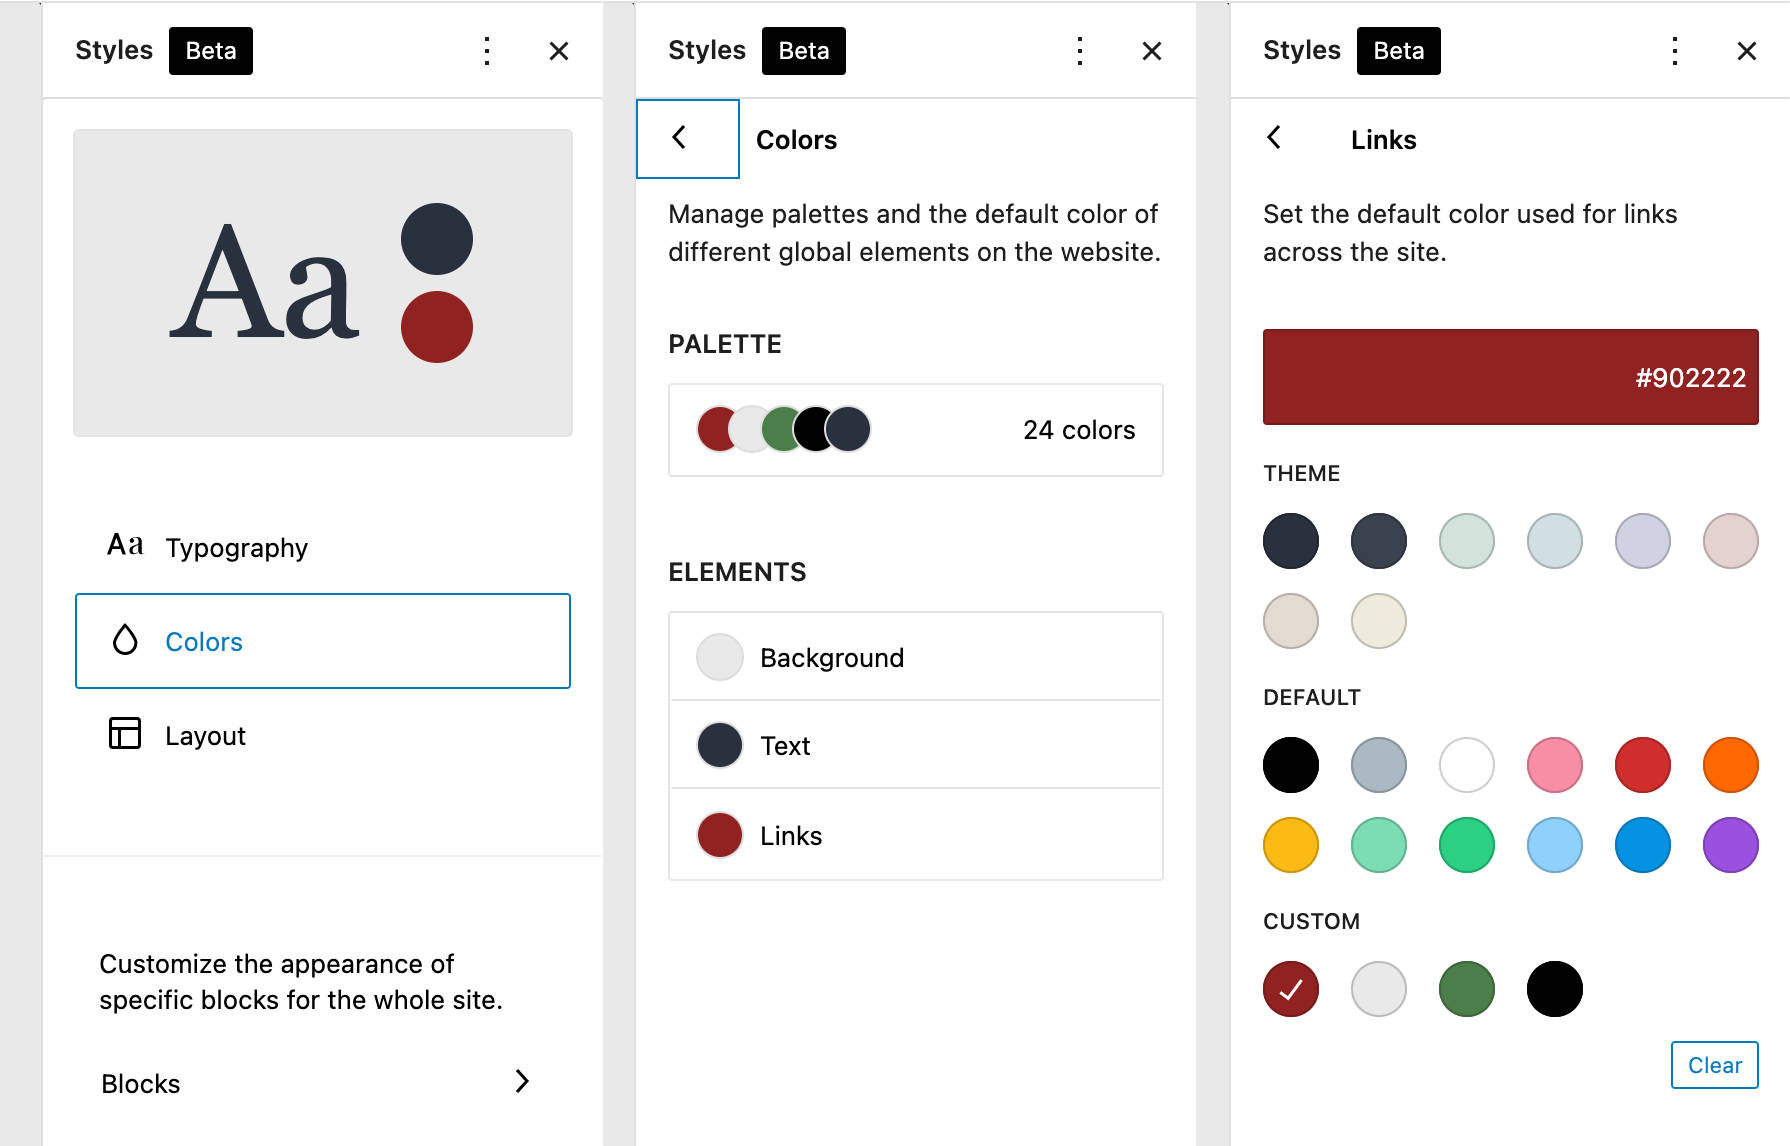 TT1 块颜色设置，显示三个独立调色板选项的各种色环：主题、默认和自定义。